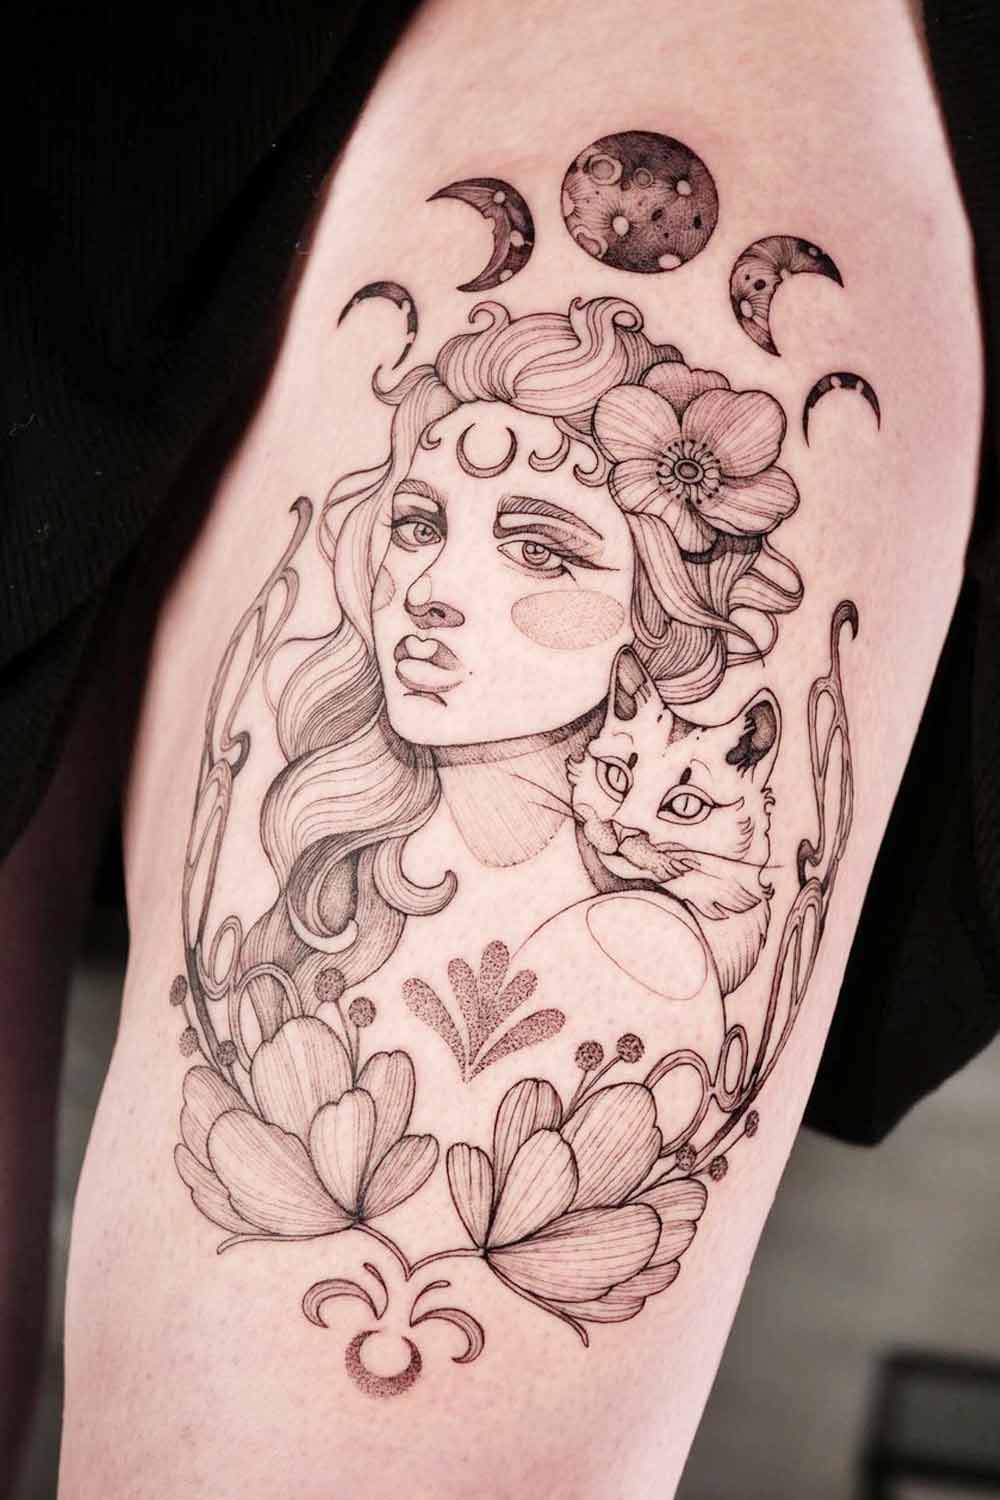 Female Portrait with a Cat Tattoo Design